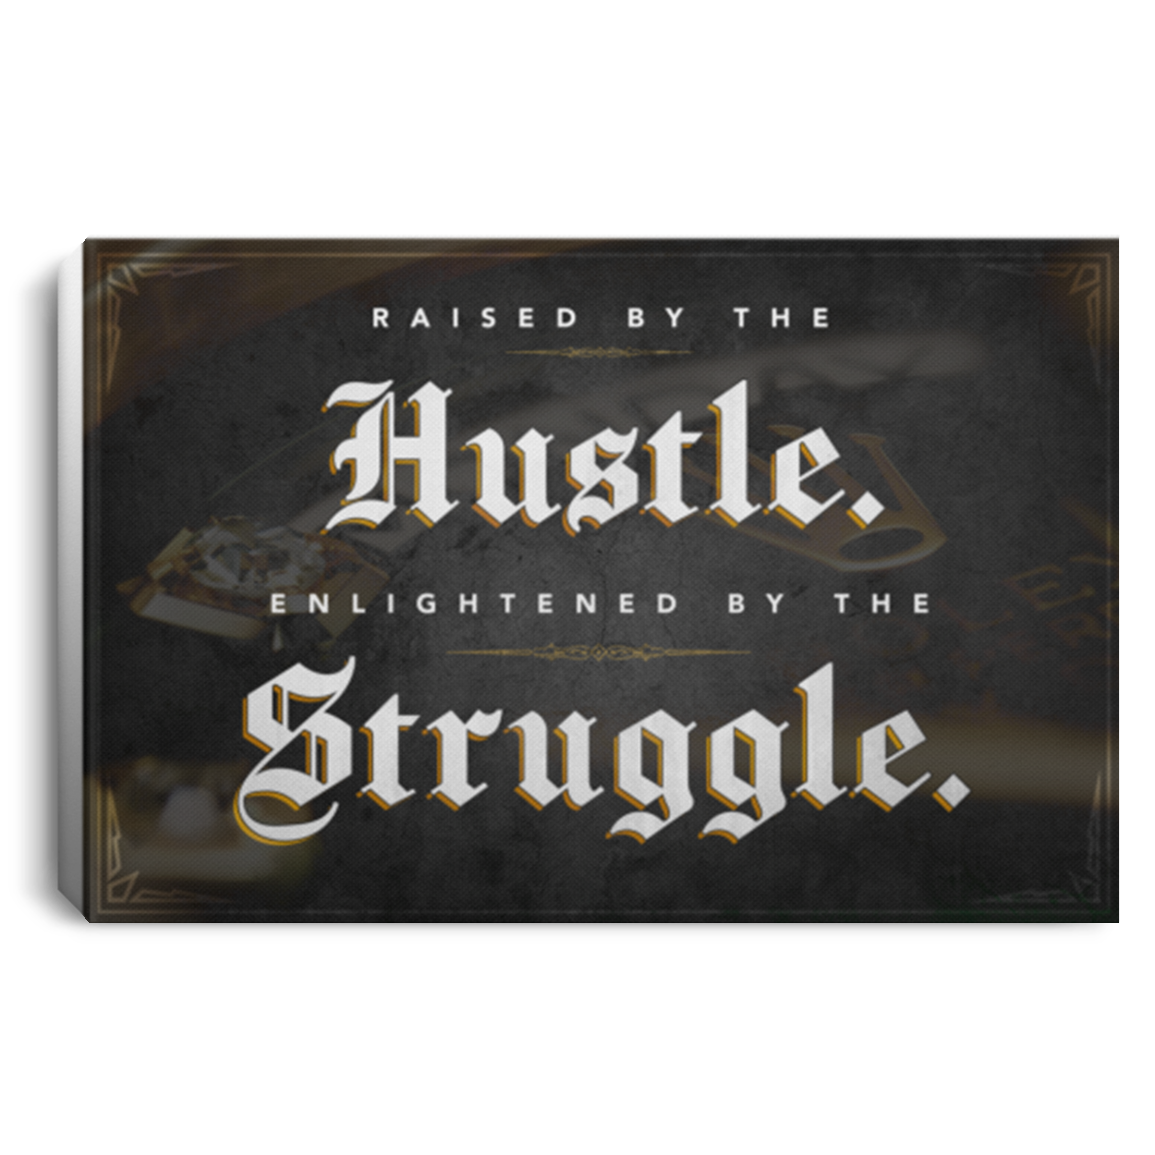 Hustle x Struggle